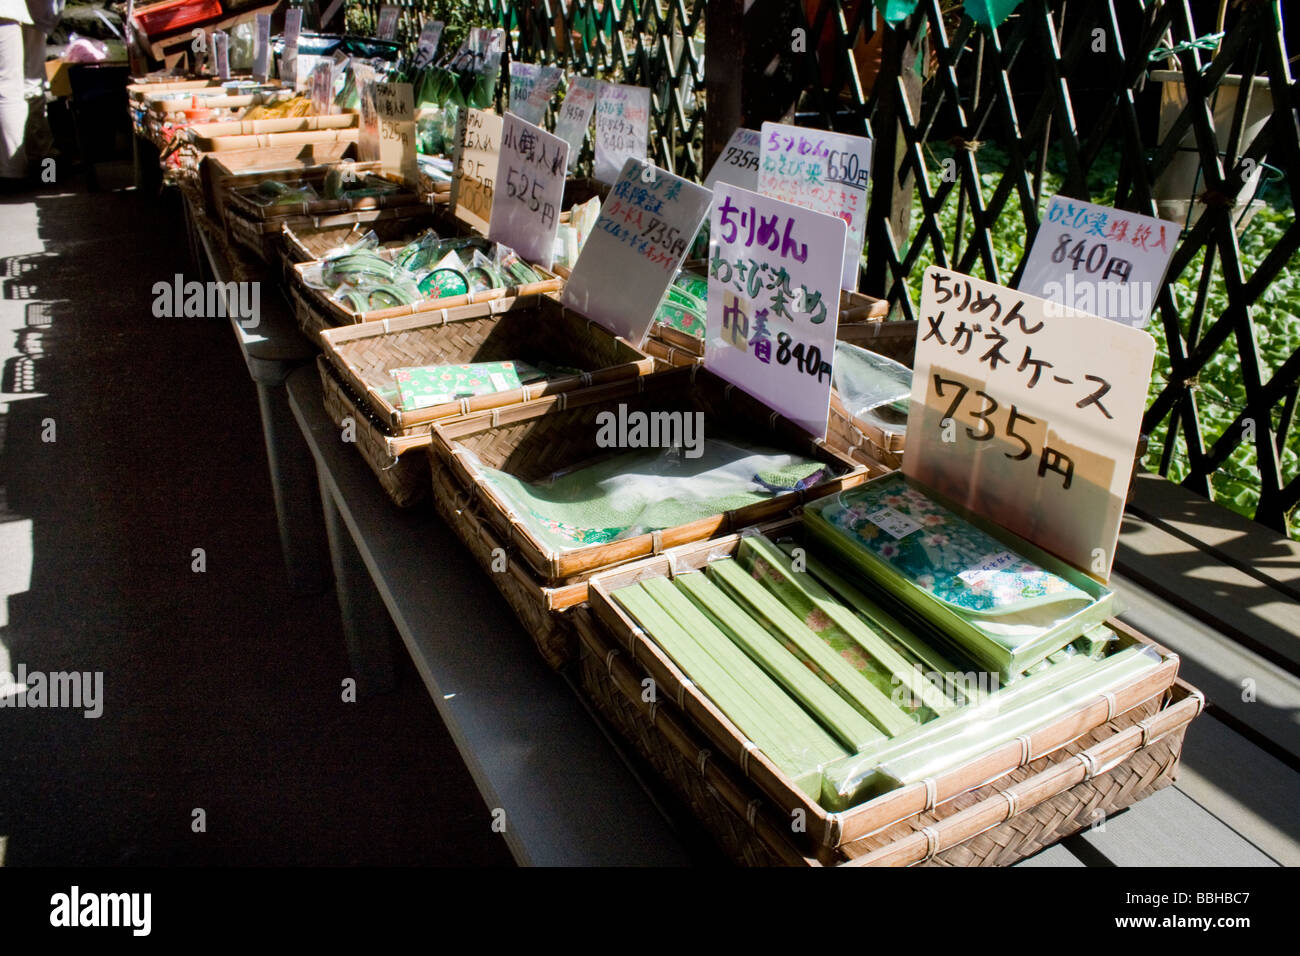 Wasabi shop near Jouren waterall, Japan Stock Photo